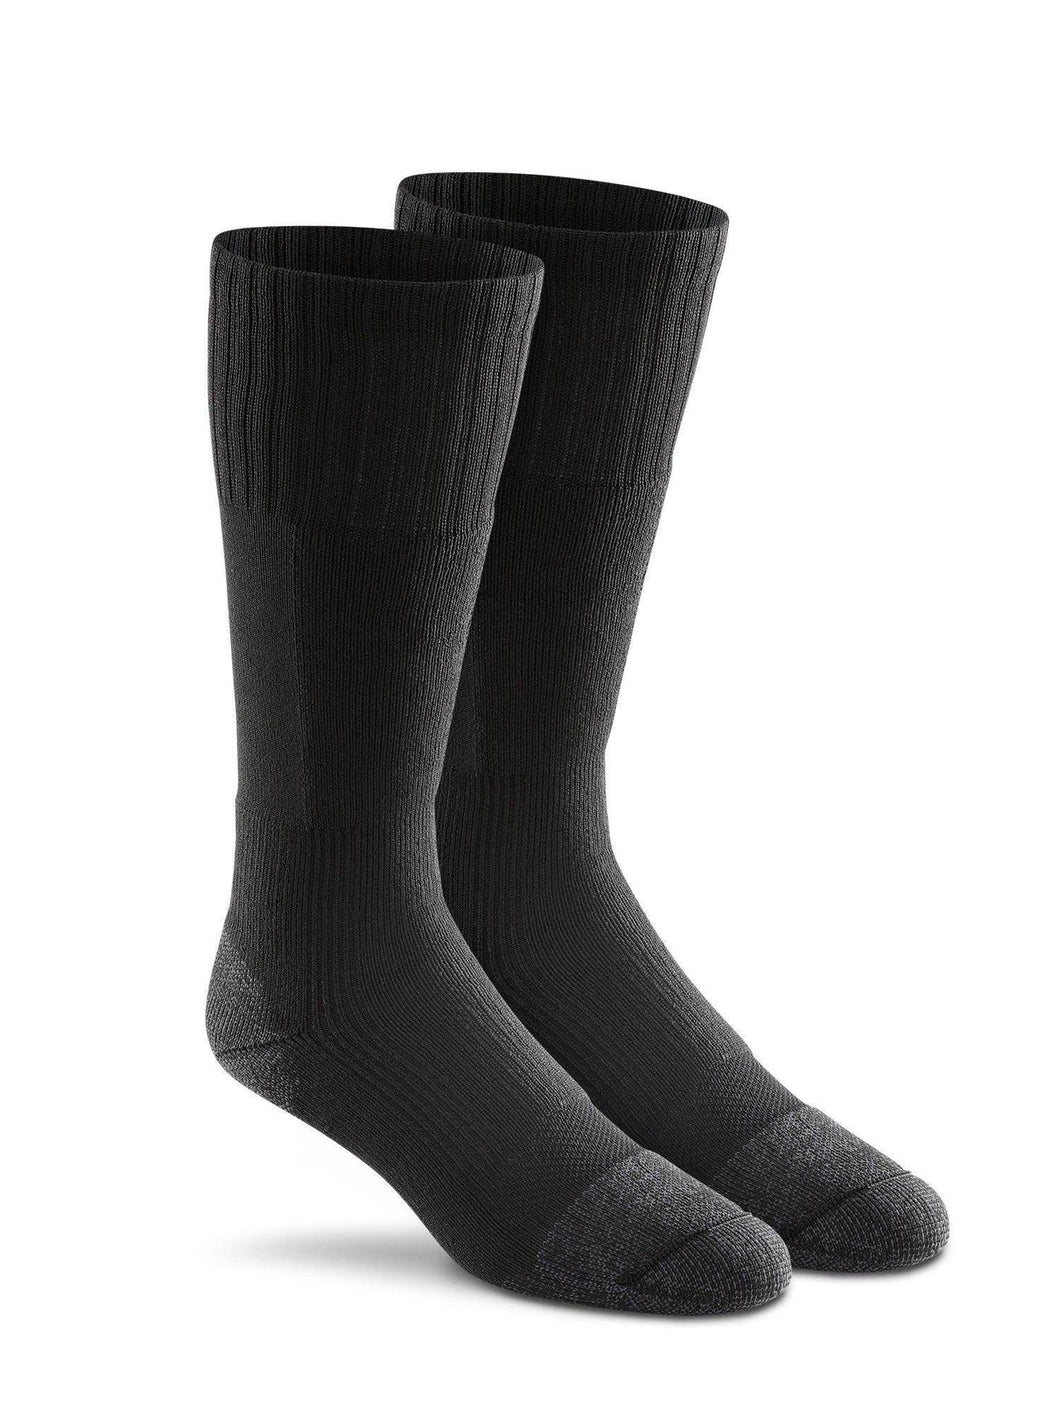 FOX RIVER Wick Dry Maximum Socks - Black